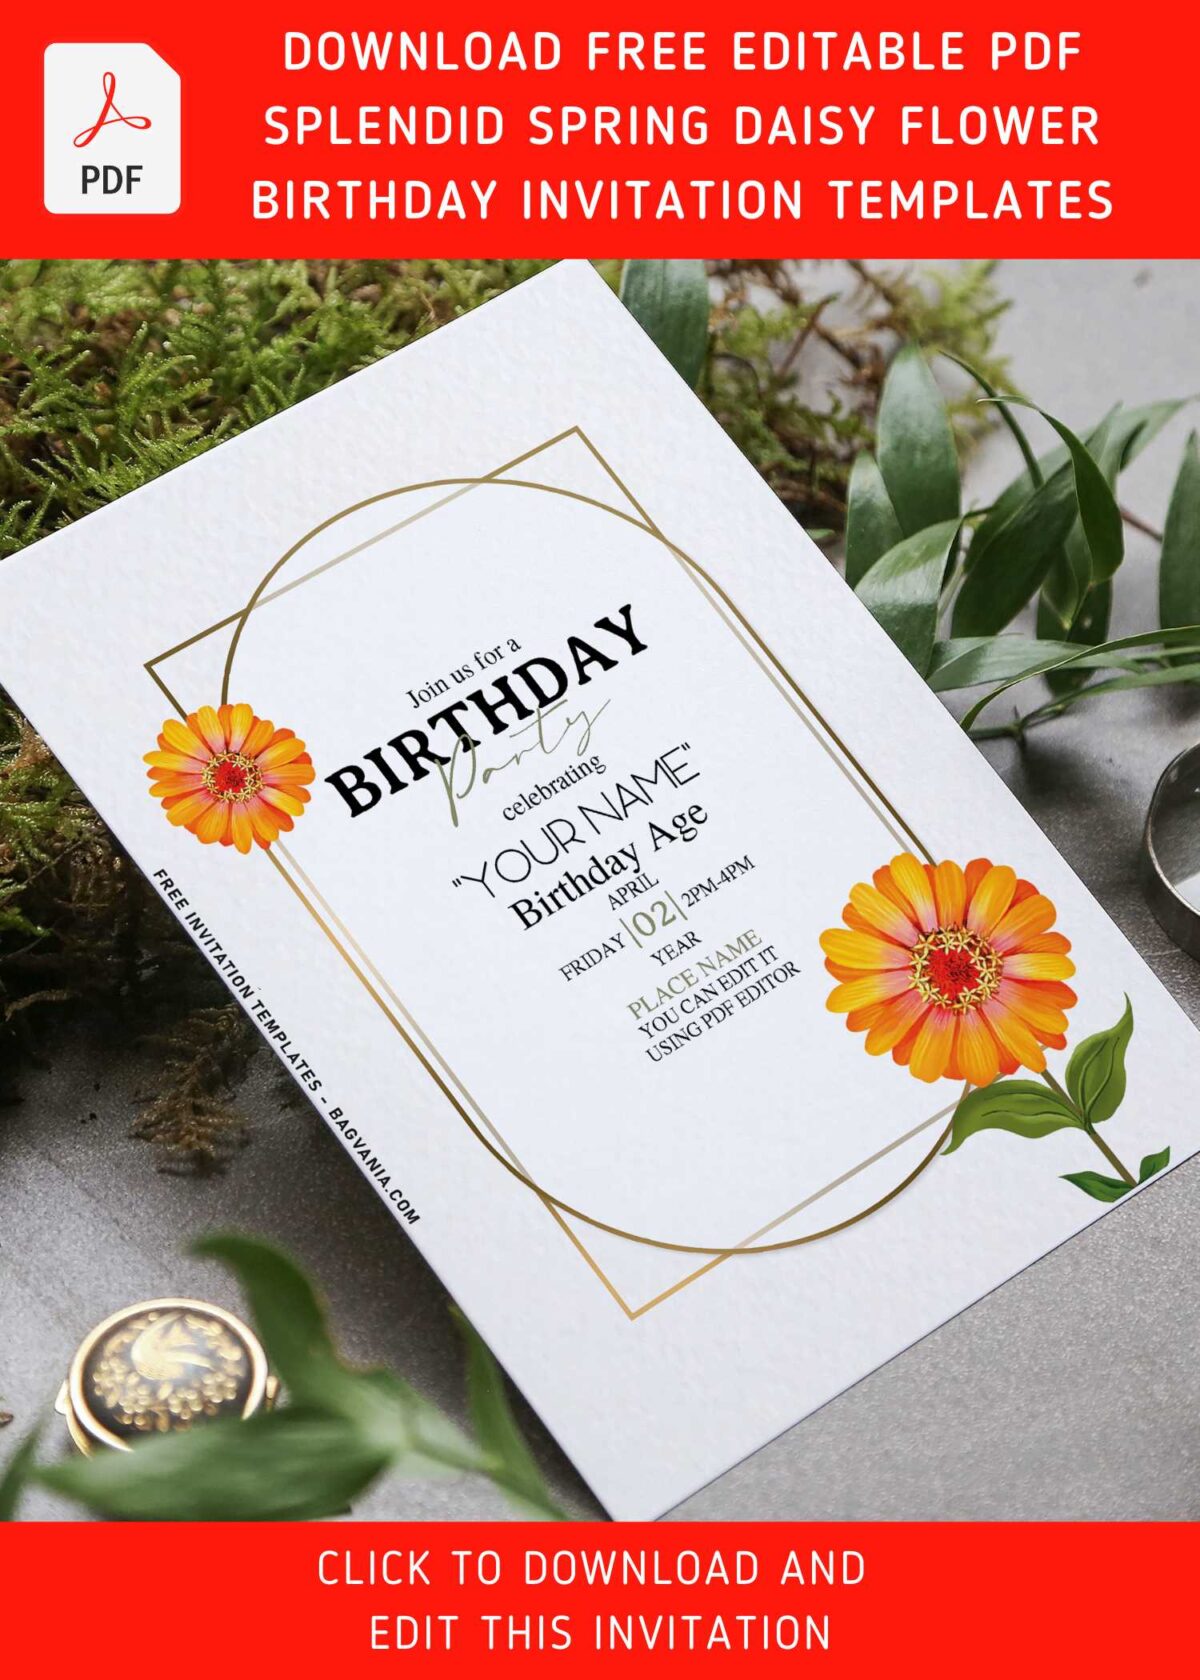 (Free Editable PDF) Splendid Spring Daisy Flowers Invitation Templates with bright and cheery Daisy